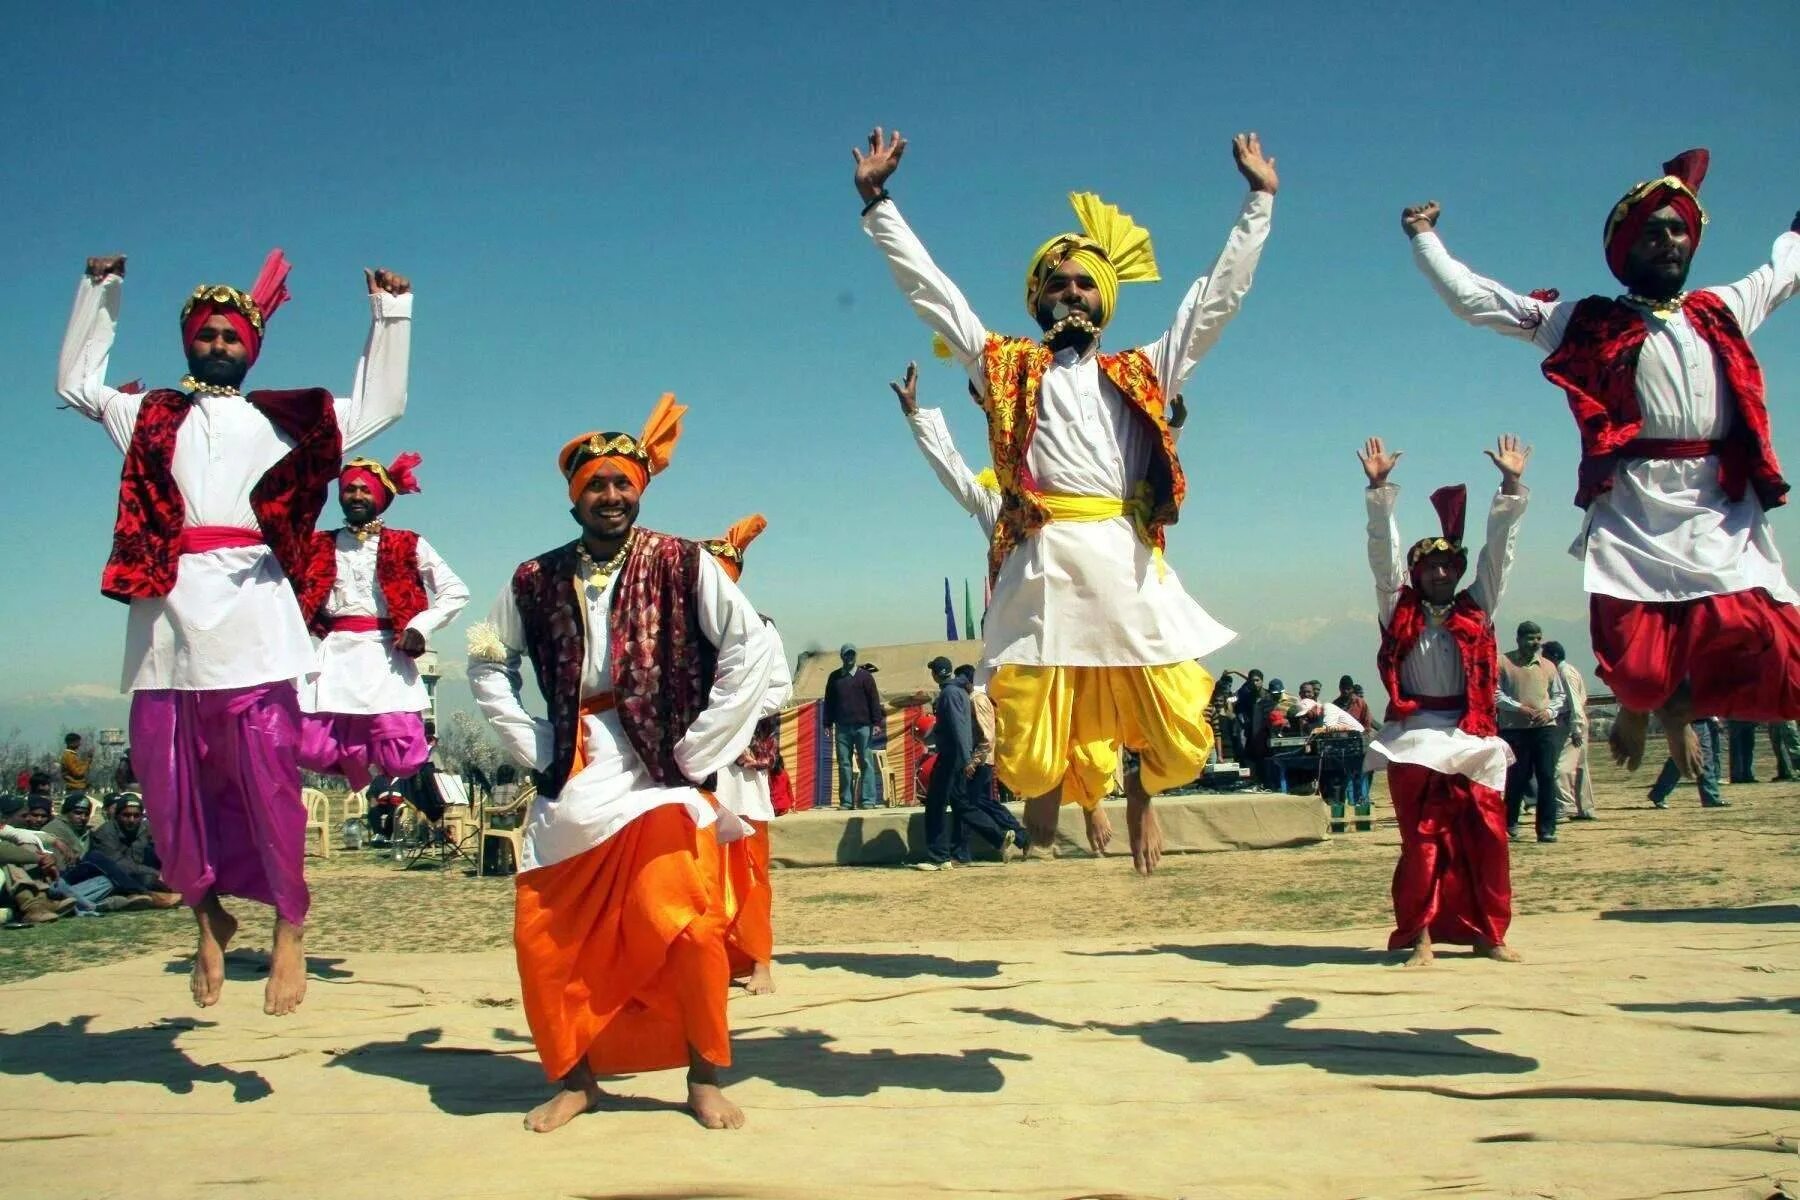 Пенджаб Индия ,Бхангра. Бхангра танец. Пенджабцы народ в Индии. Пенджабский народный танец Бхангра. History and traditions